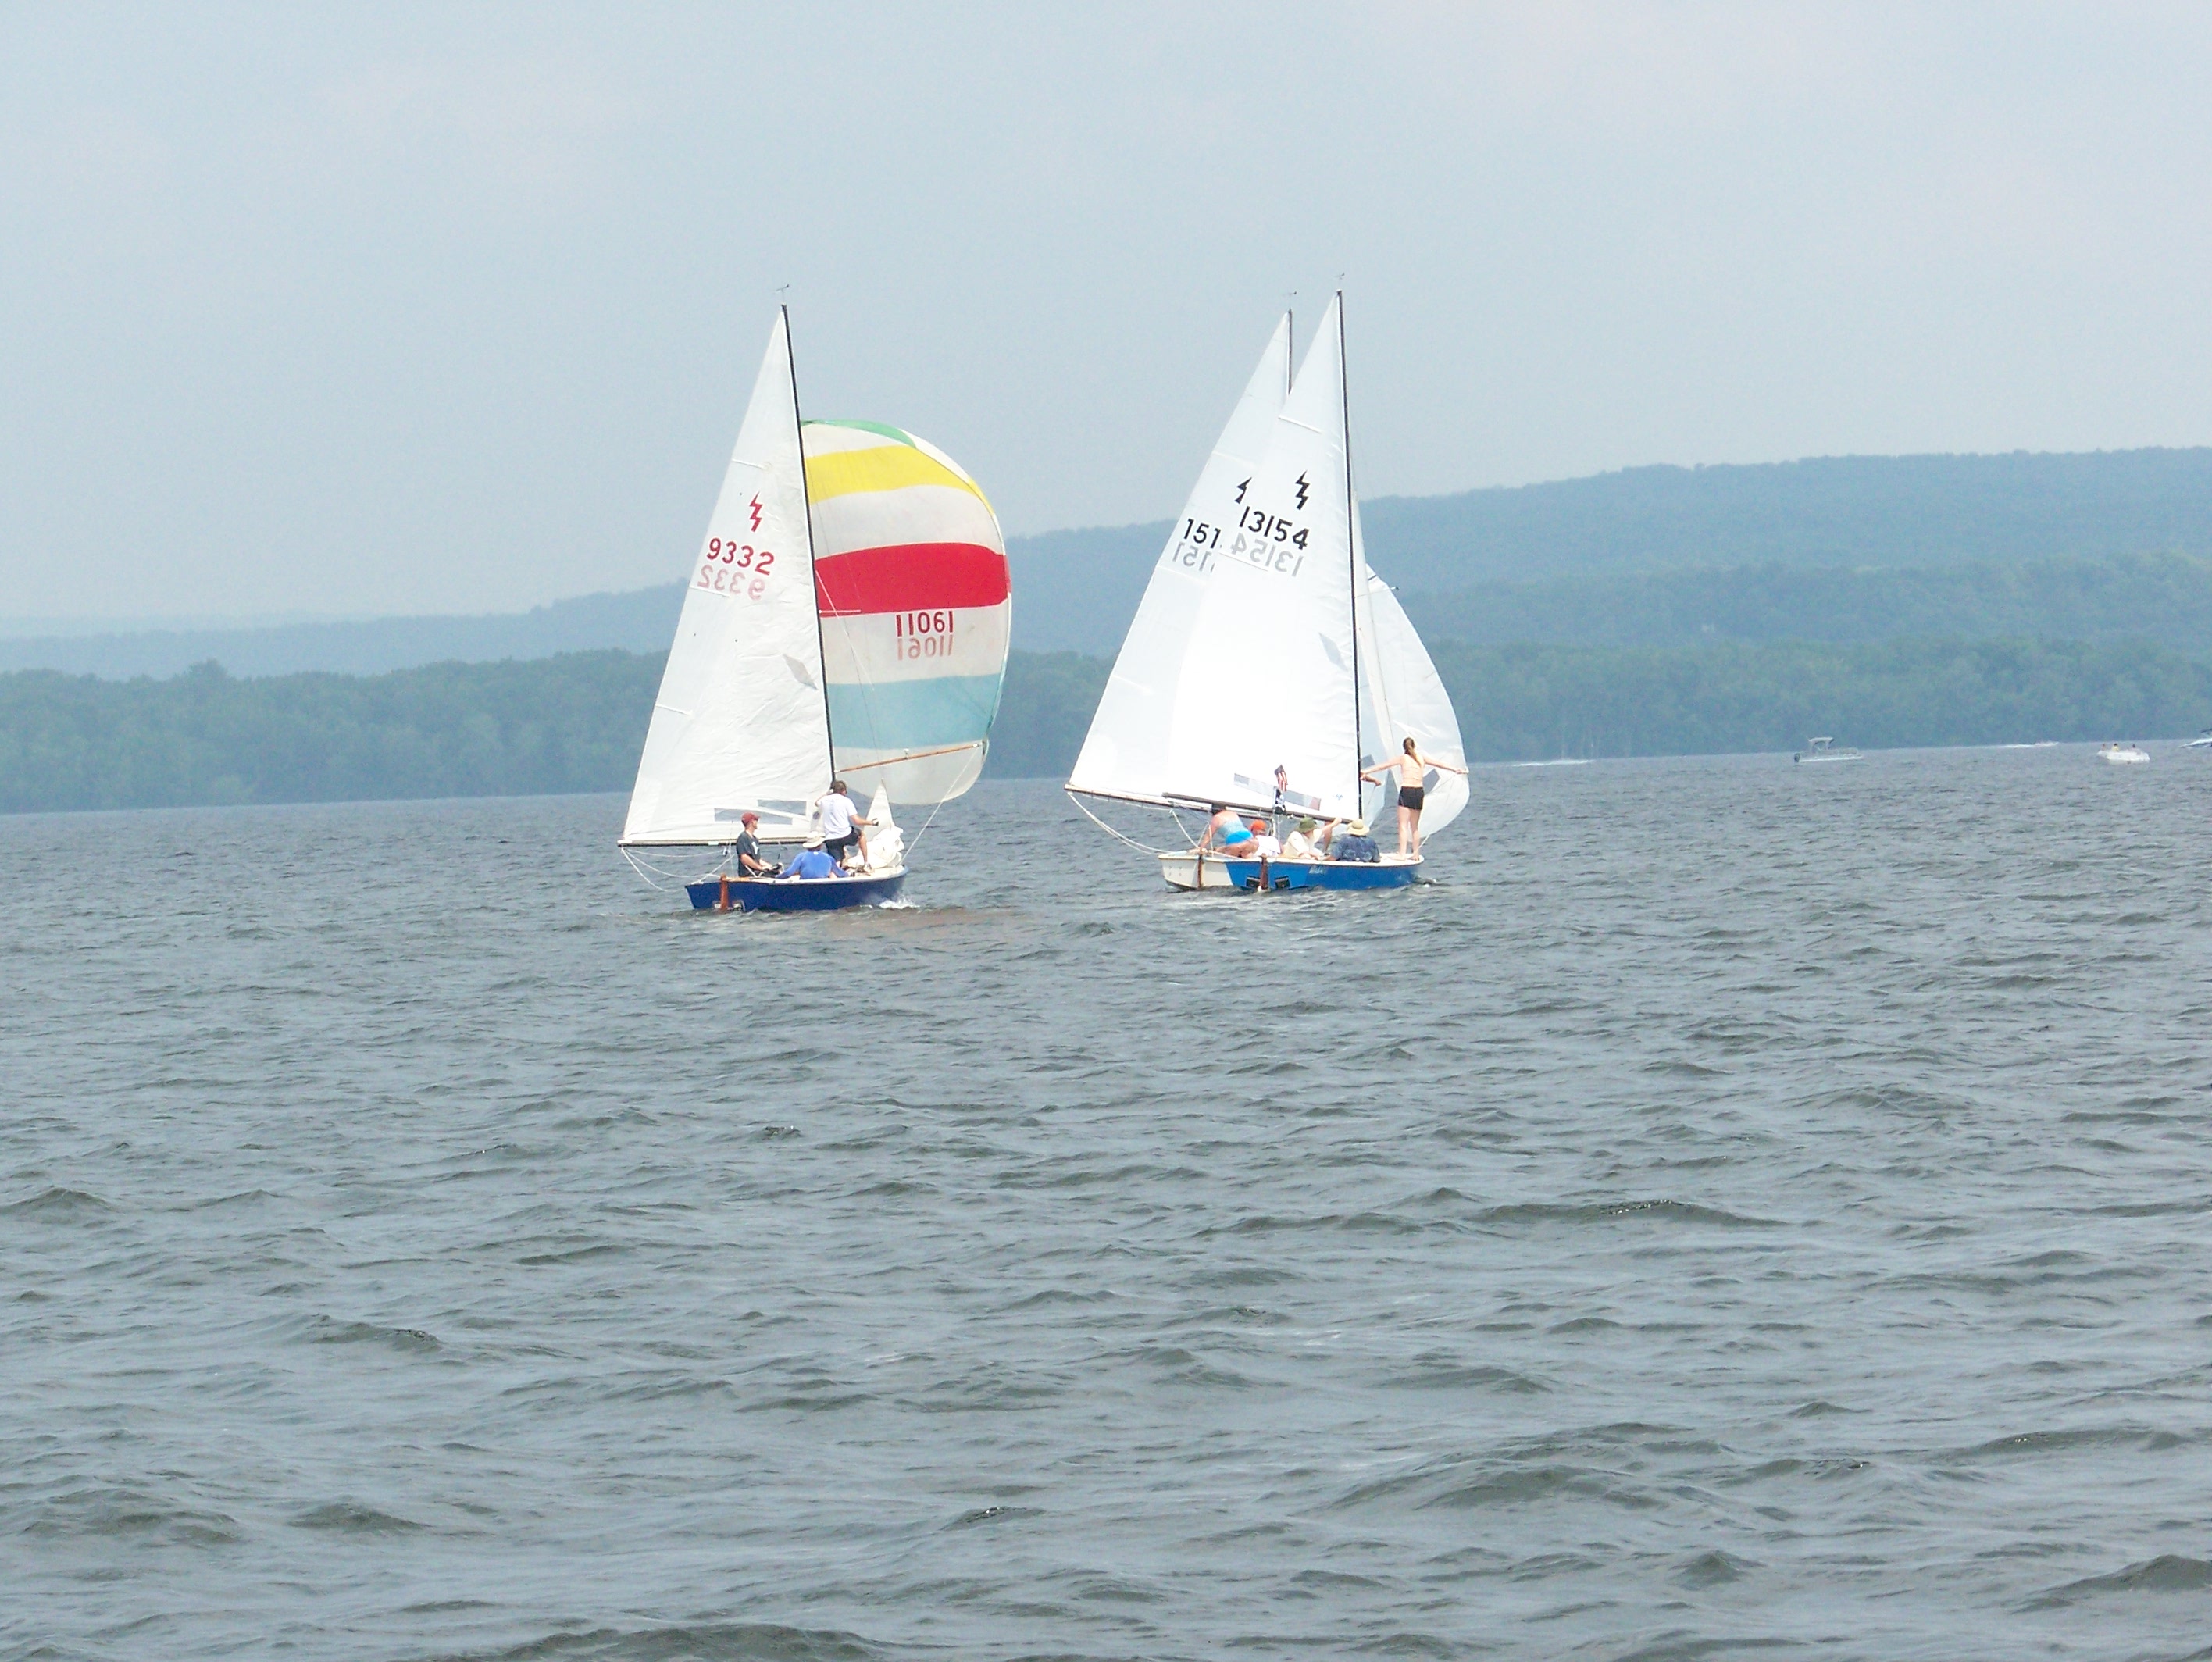 Lake Delta Yacht Club Sailstice event